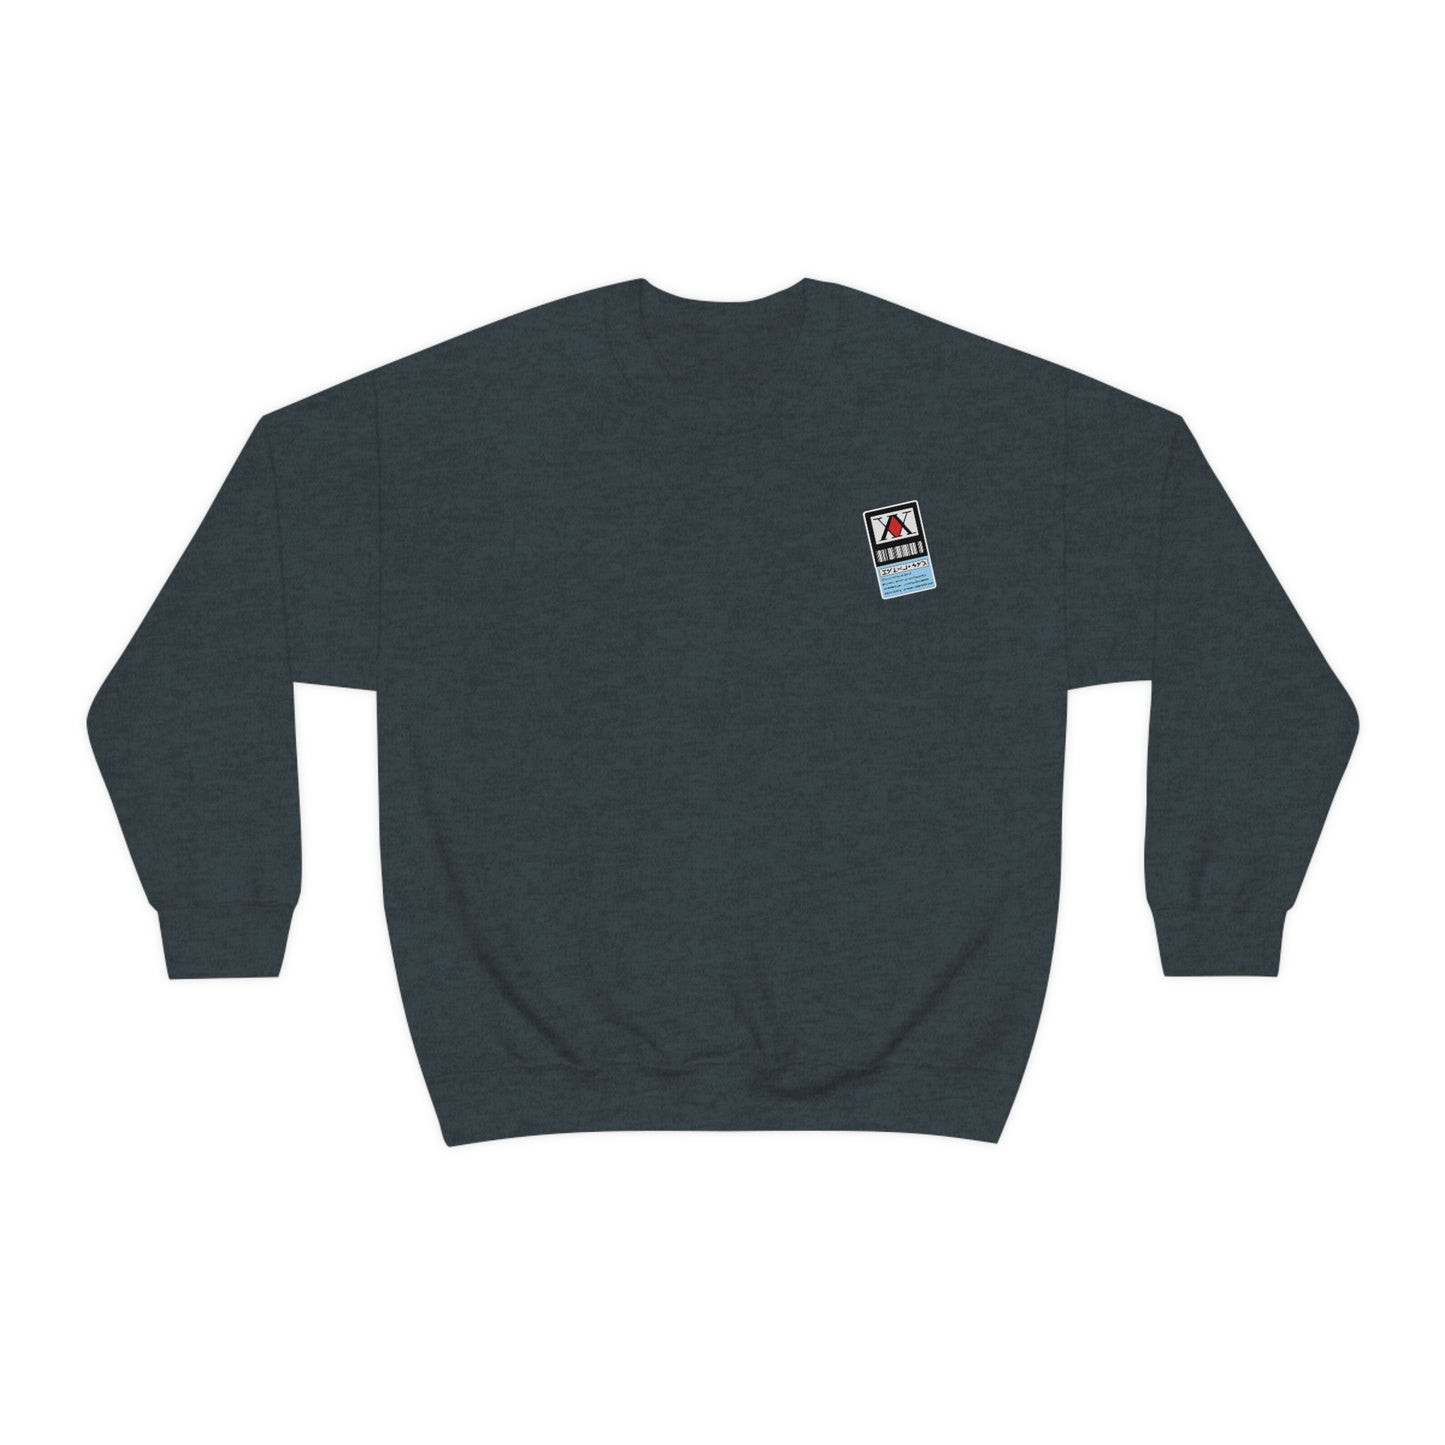 Hunter Card sweatshirt Classic sweater pullover Associations jumper